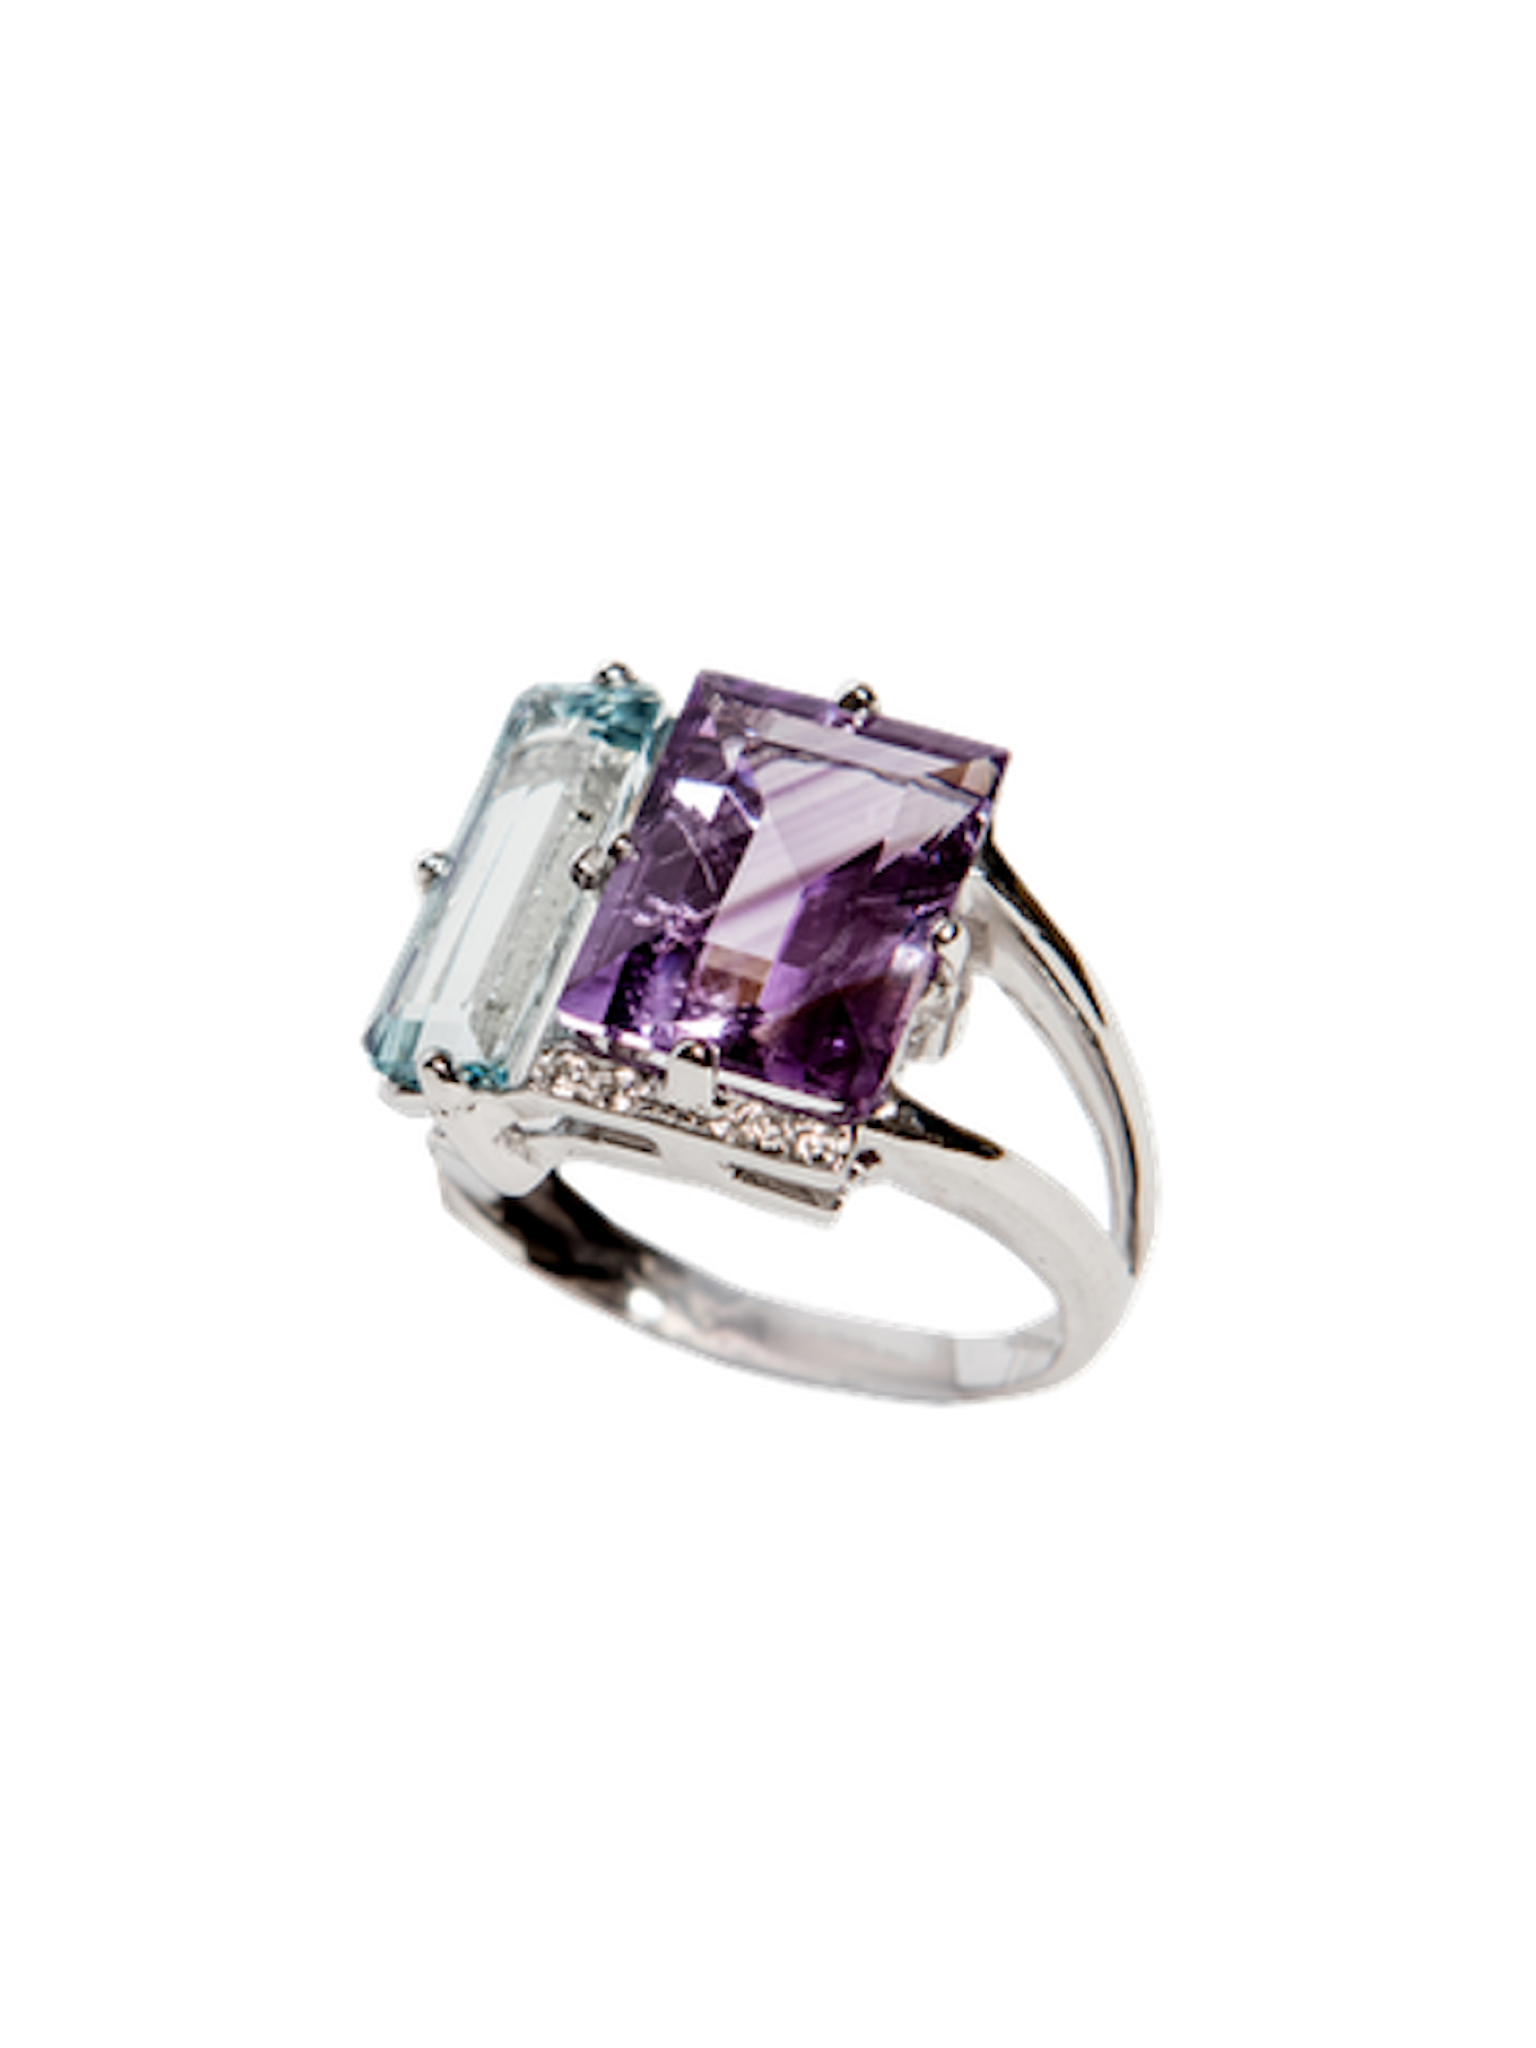 Amethyst, aquamarine and white diamond ring